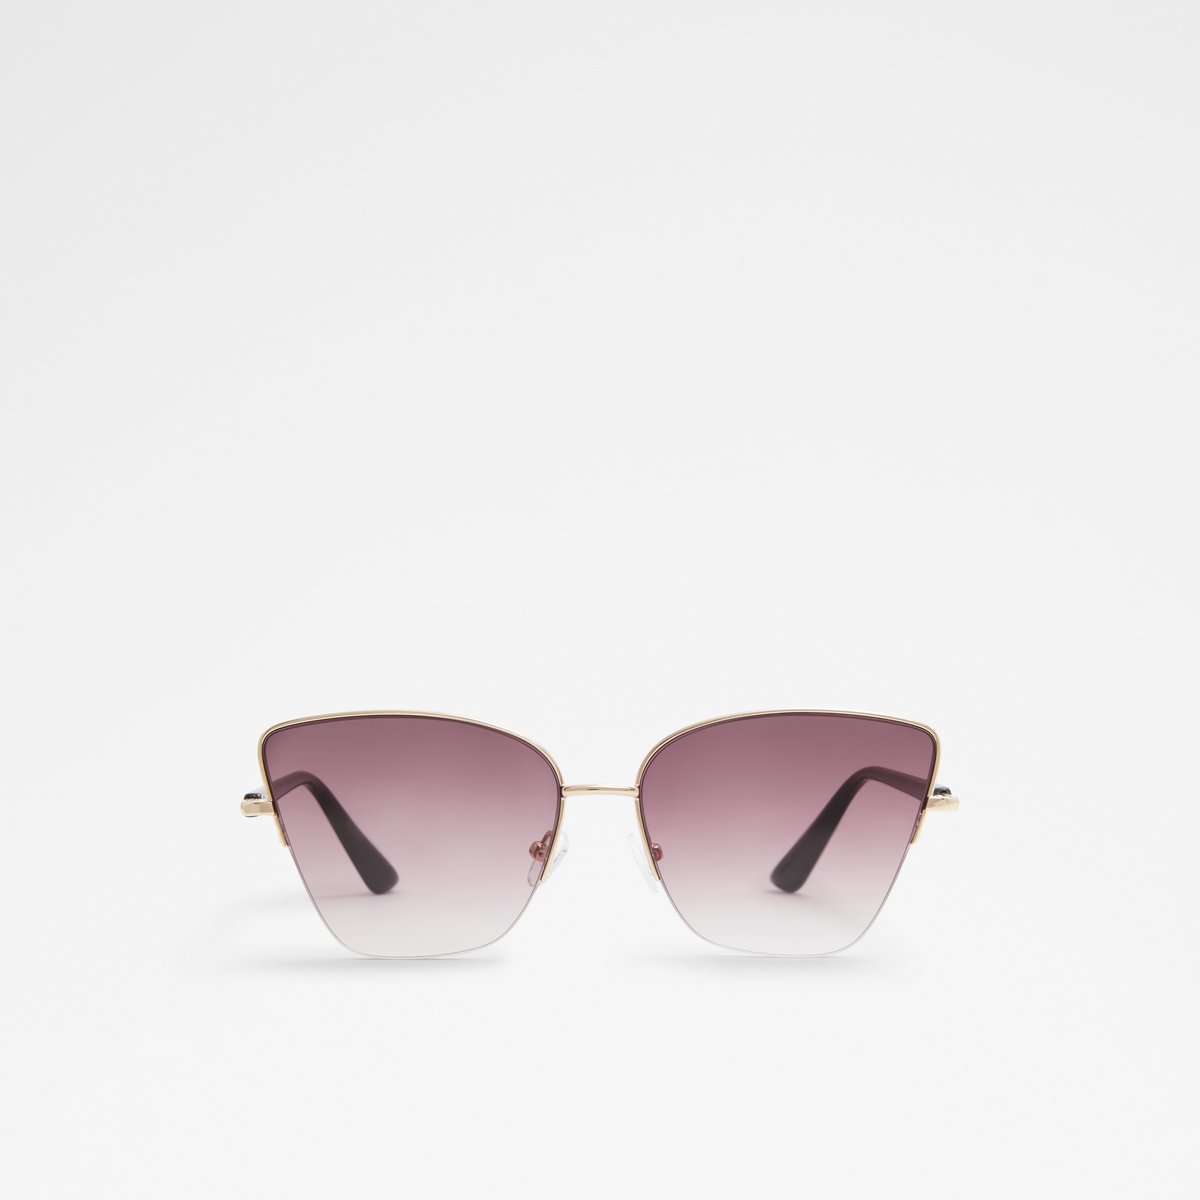 Adalwine Cat-Eye Sunglasses